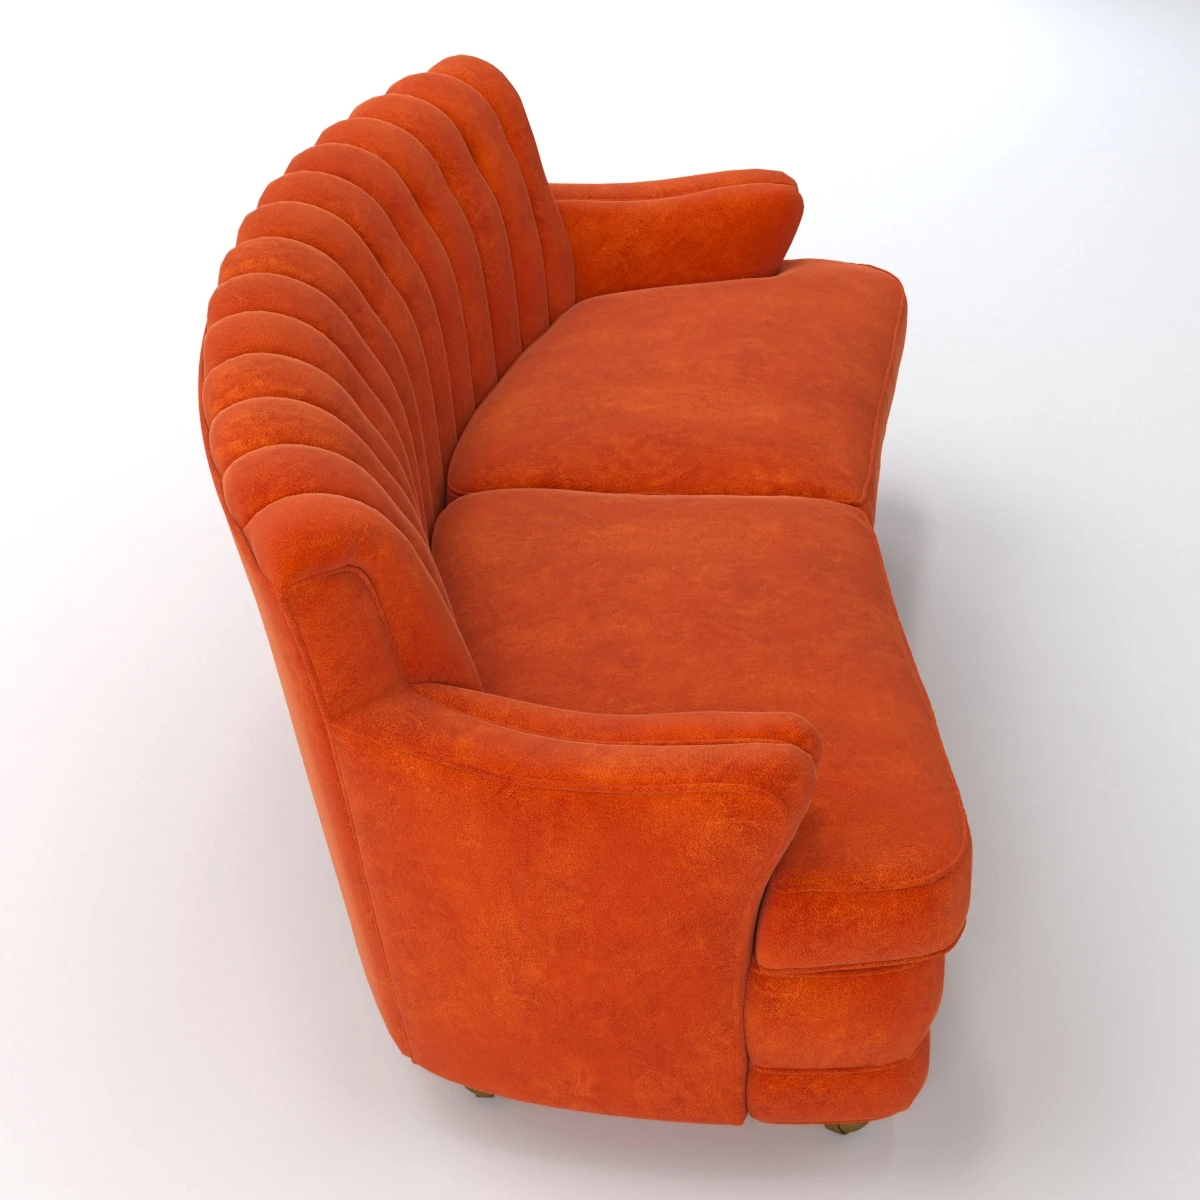 Vintage Couch Furniture Retro Orange Couch 3D Model_05